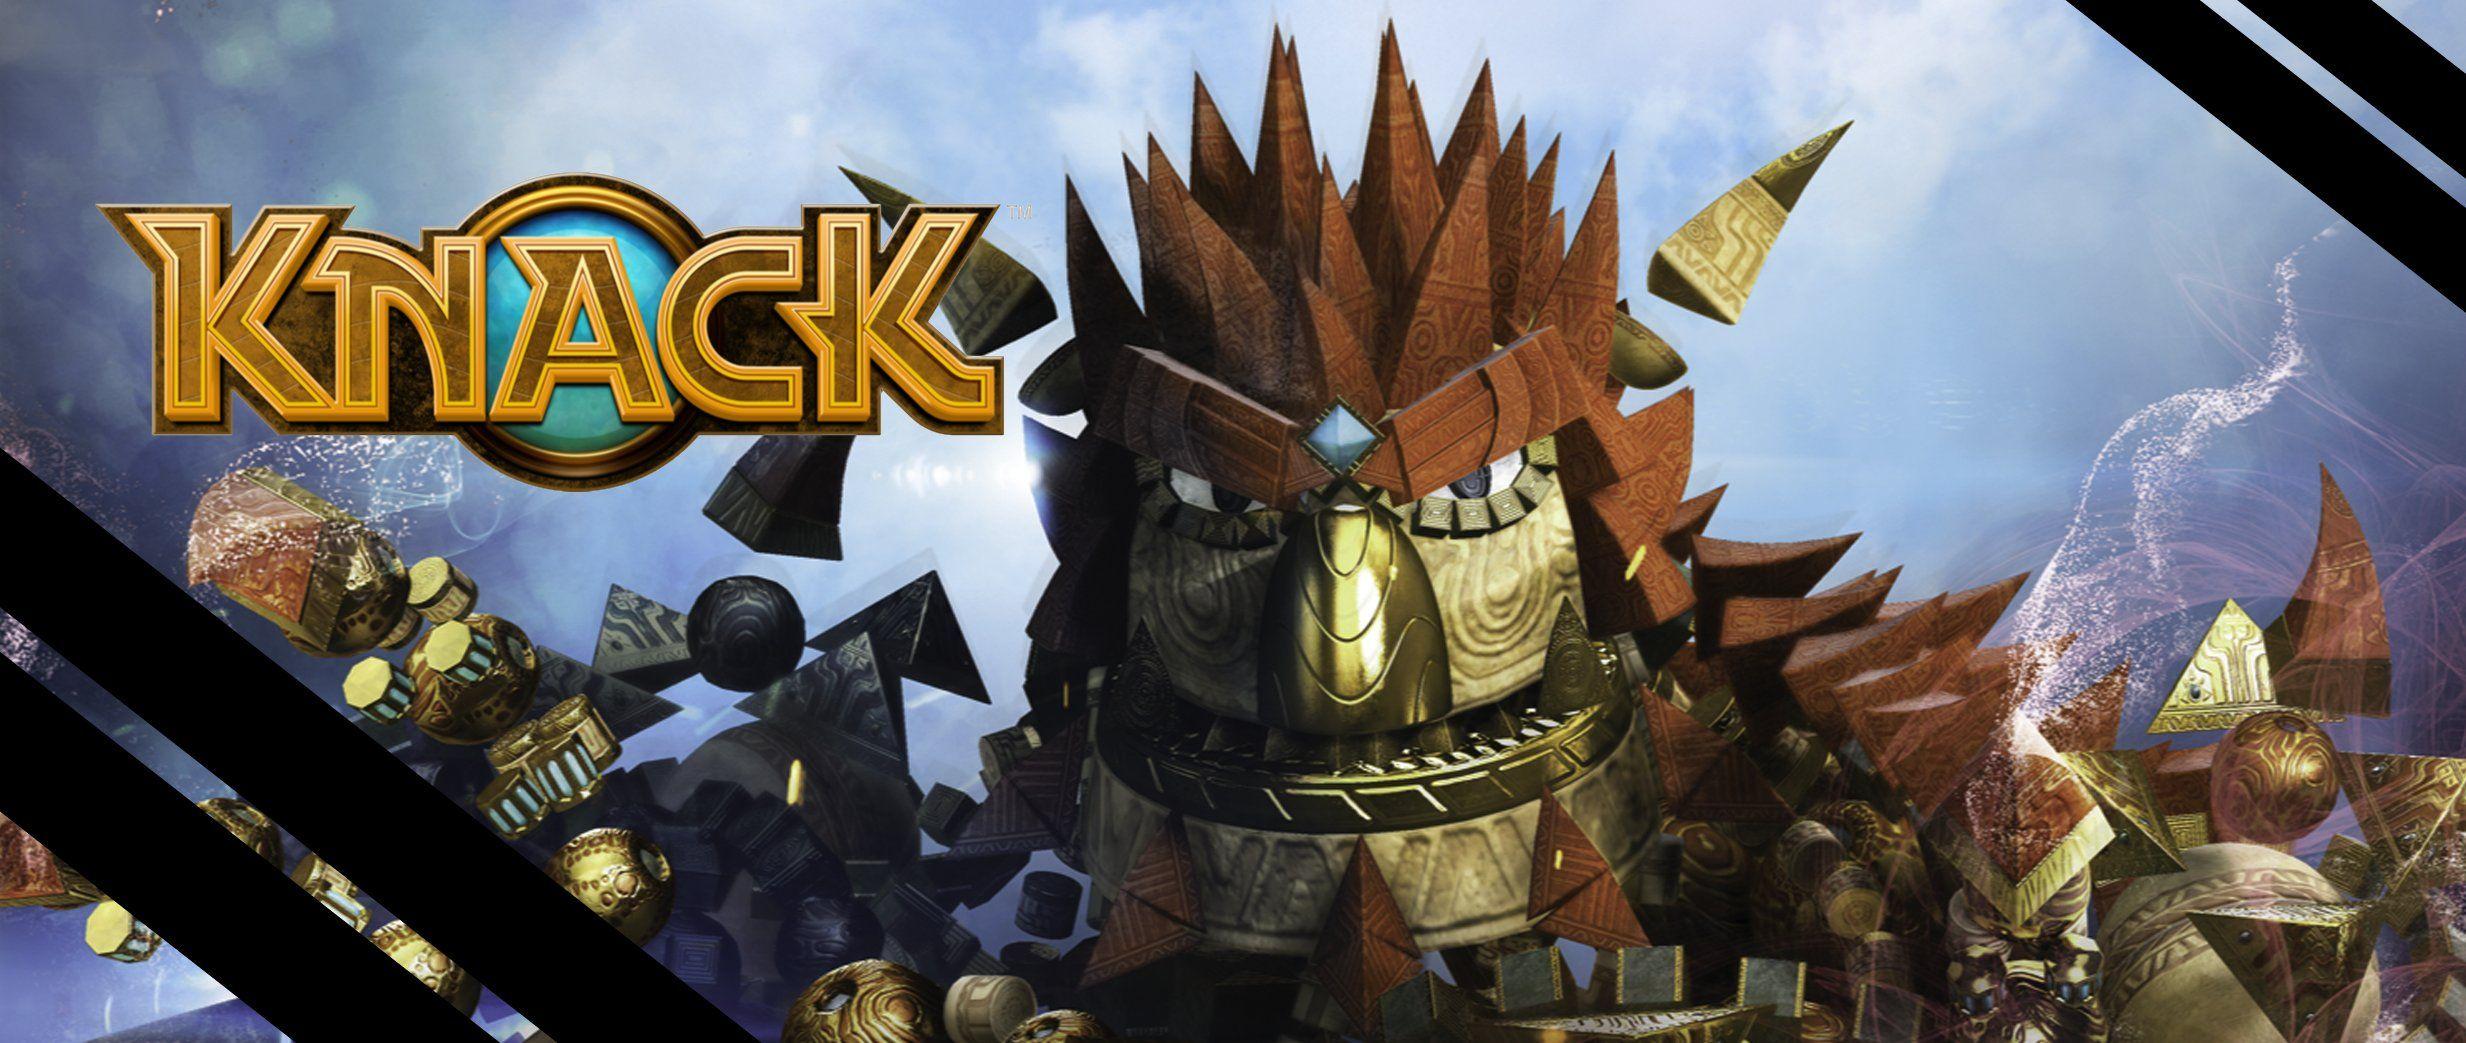 KNACK action platform fighting fight warrior adventure fantasy 3